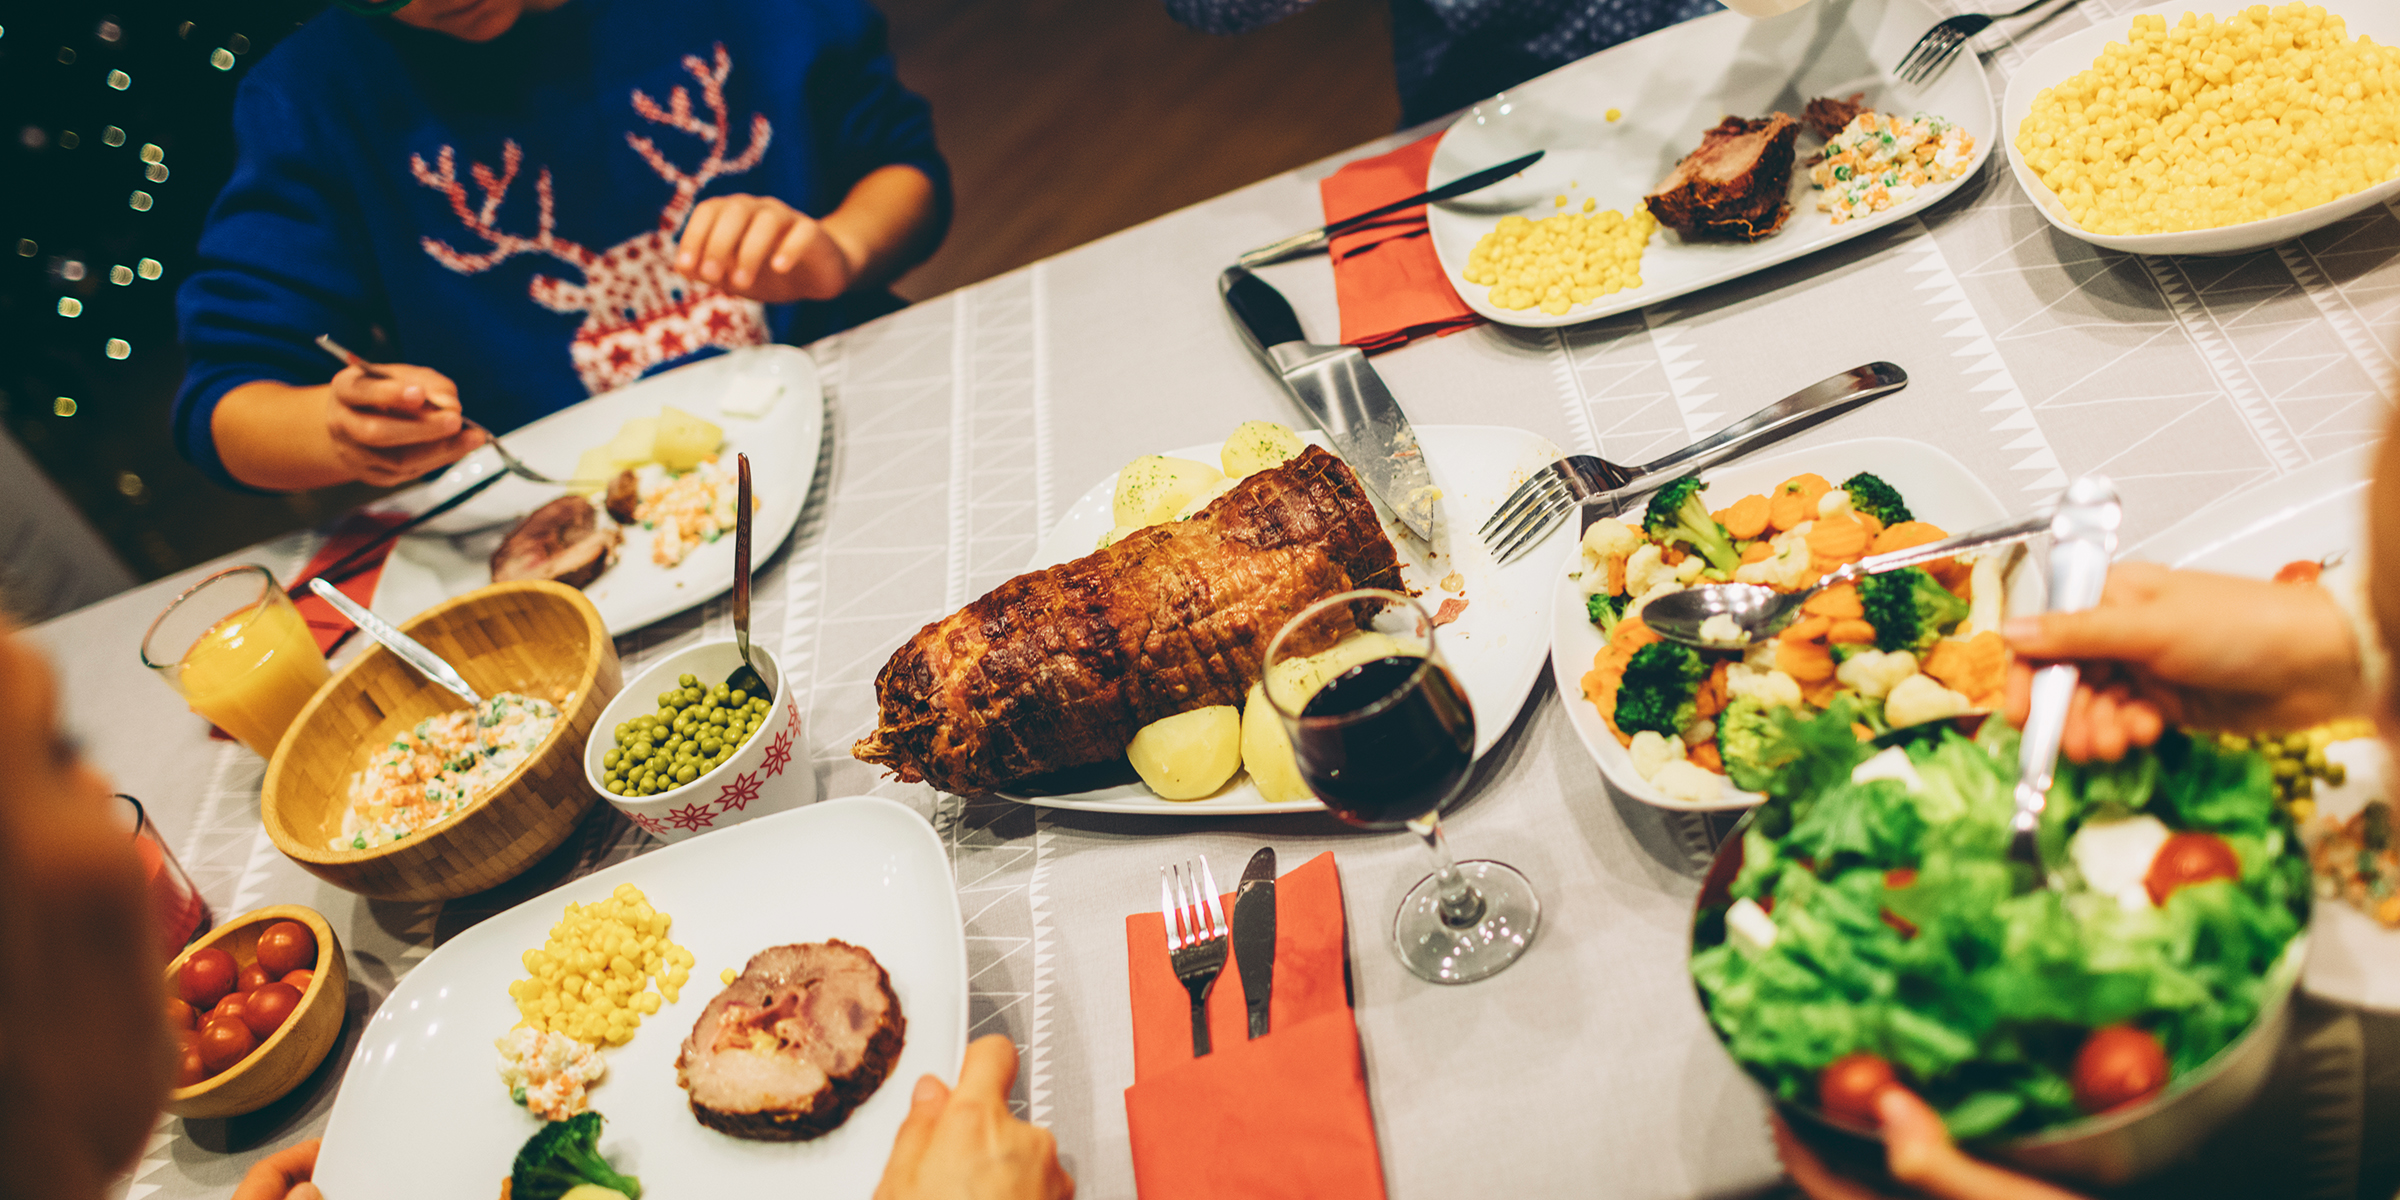 Une table remplie de nourriture | Source : Shutterstock